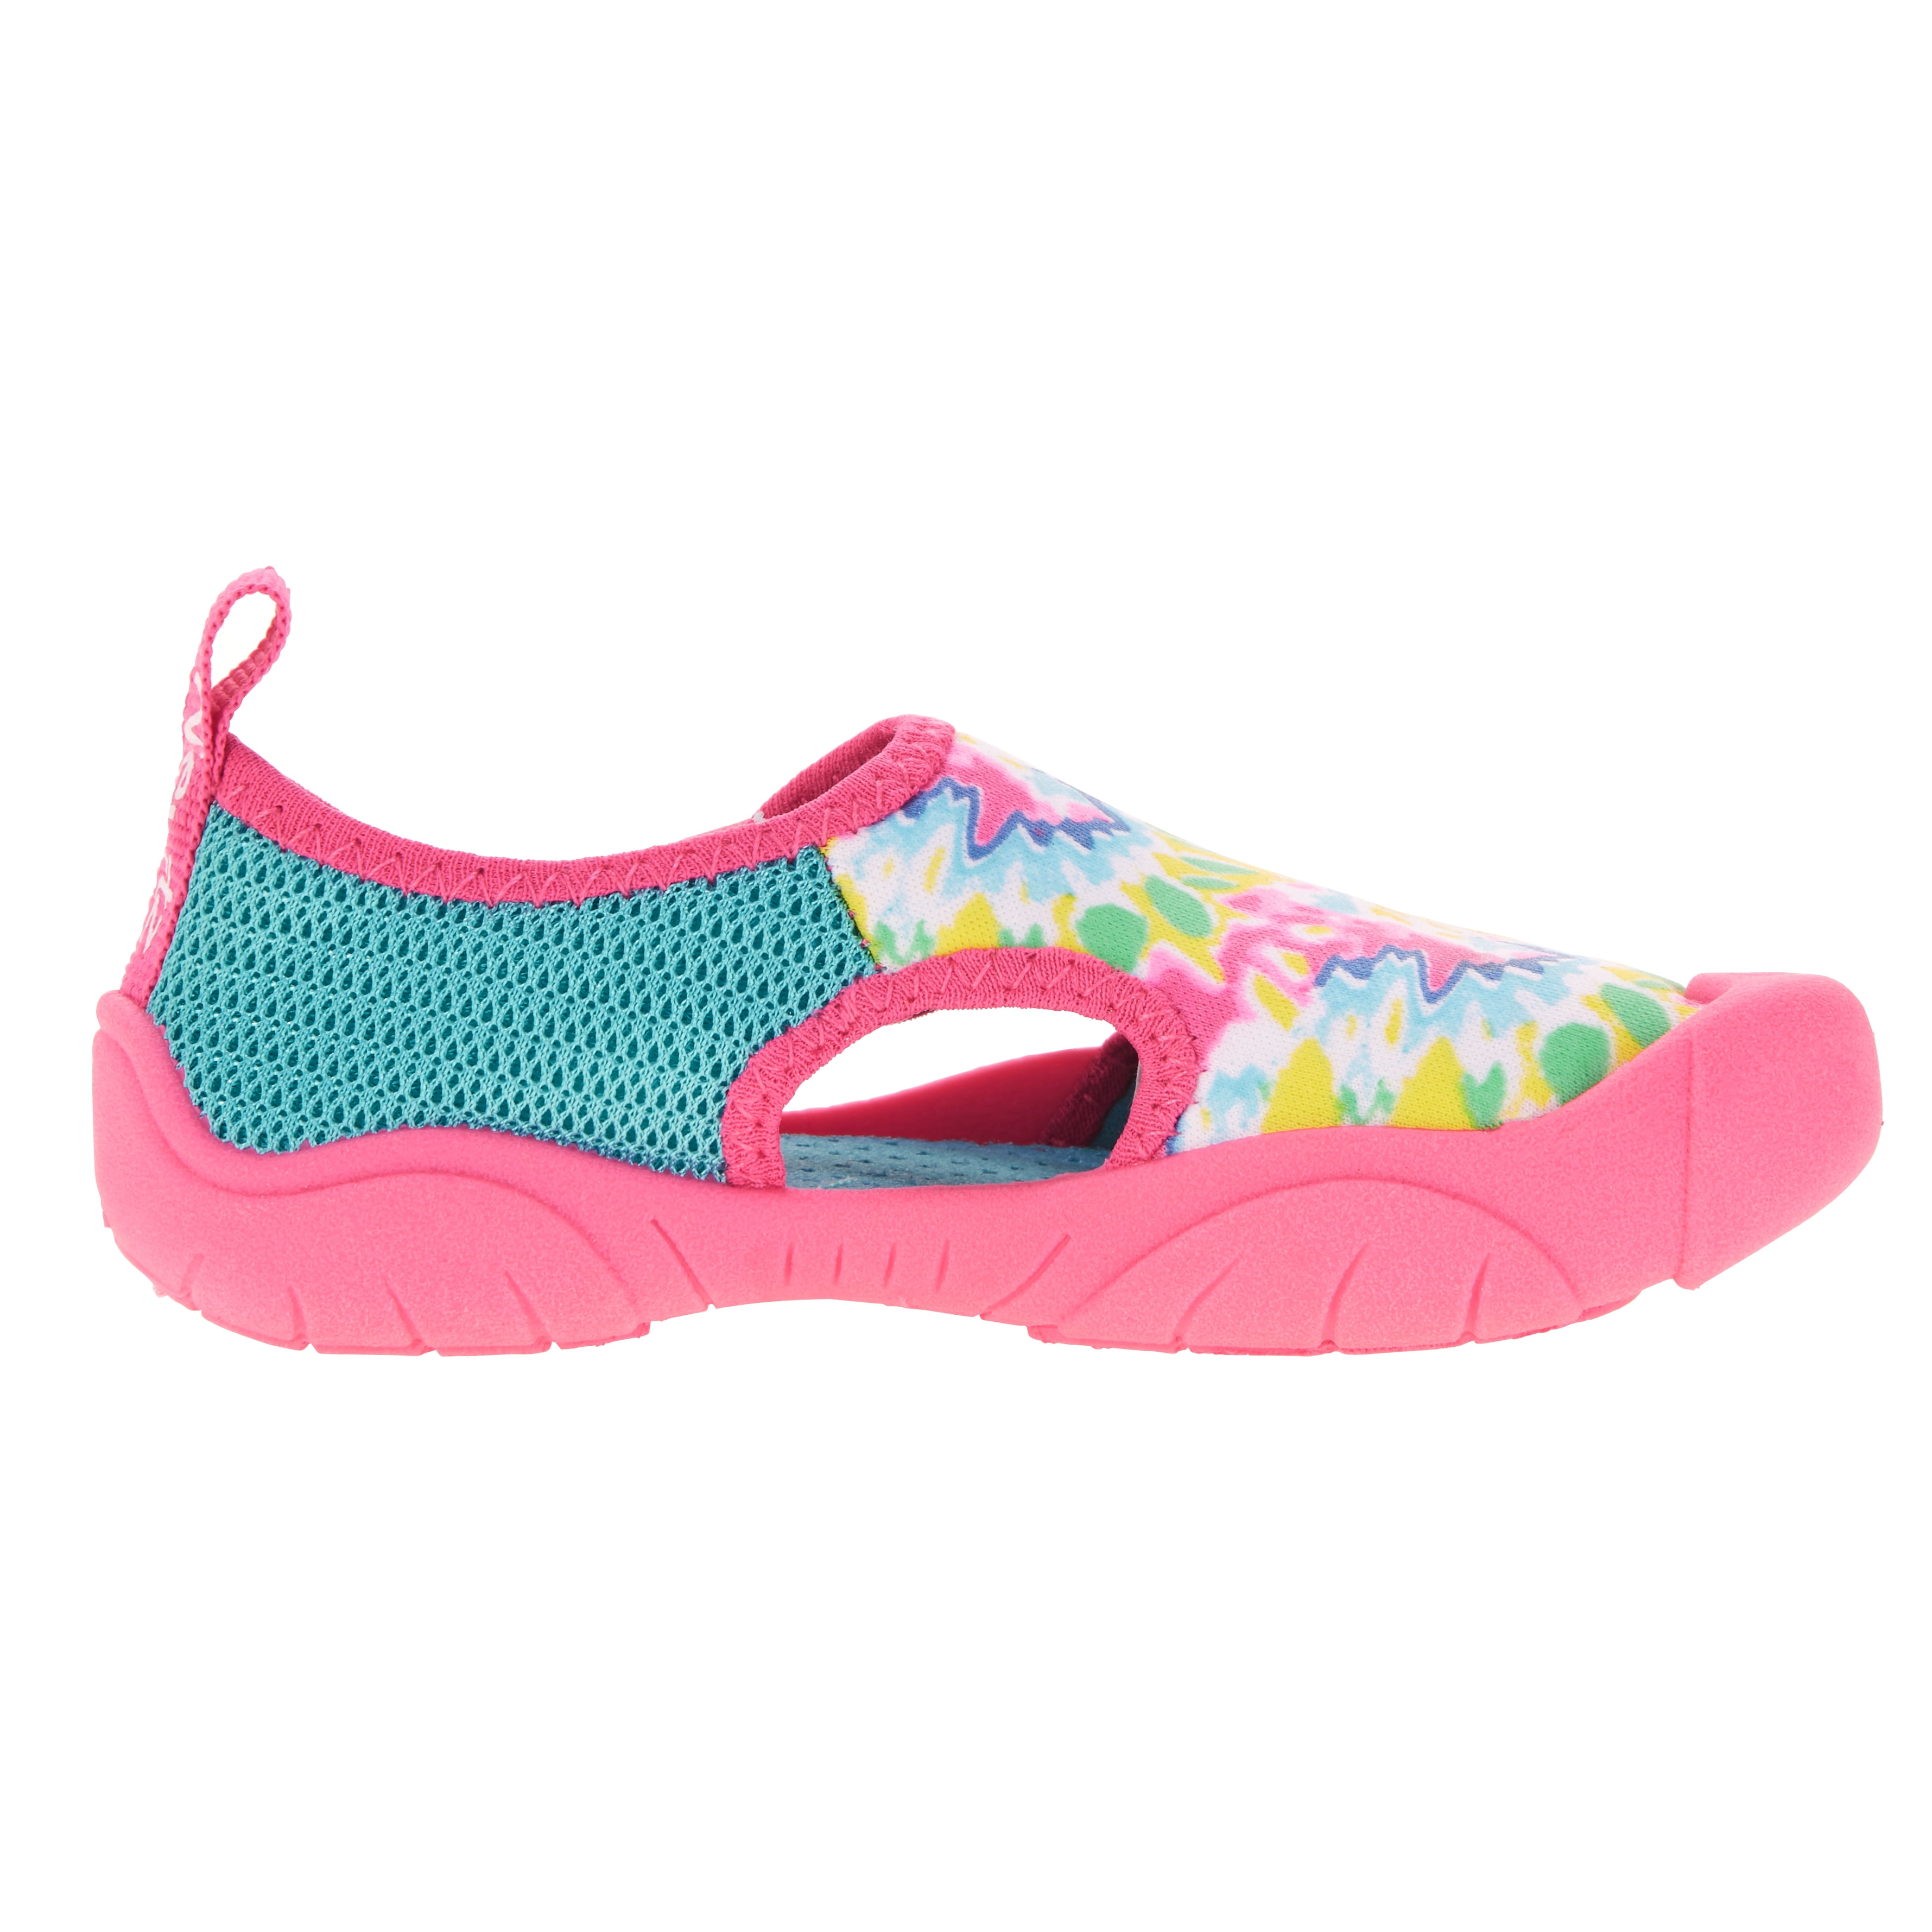 Newtz - Toddler Girl's Beach Water Shoe 